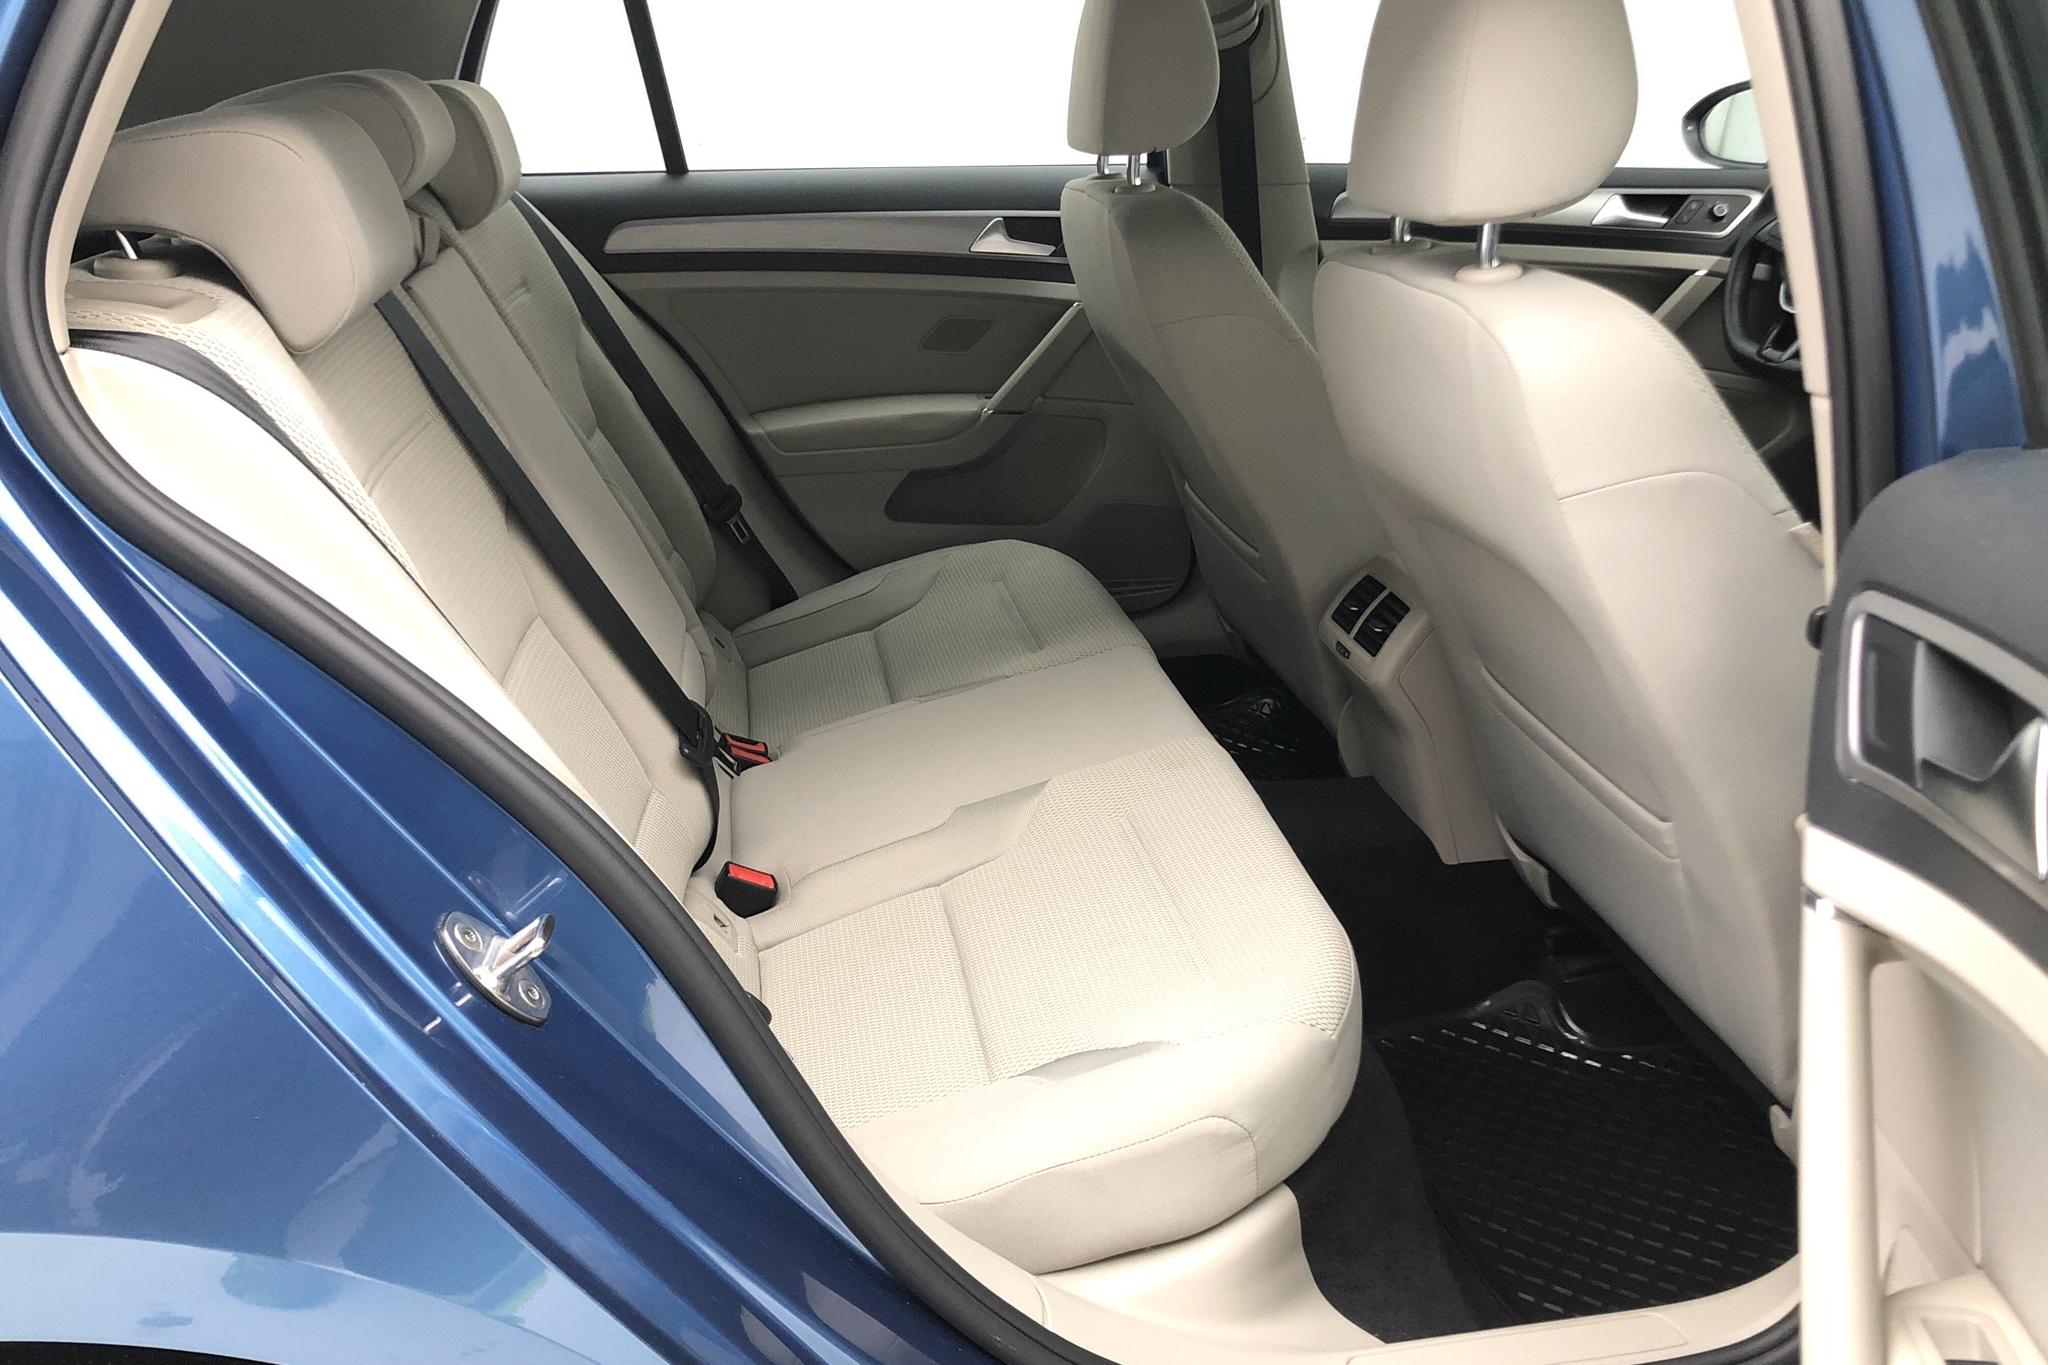 VW Golf VII 1.2 TSI 5dr (110hk) - 44 510 km - Automatic - blue - 2017